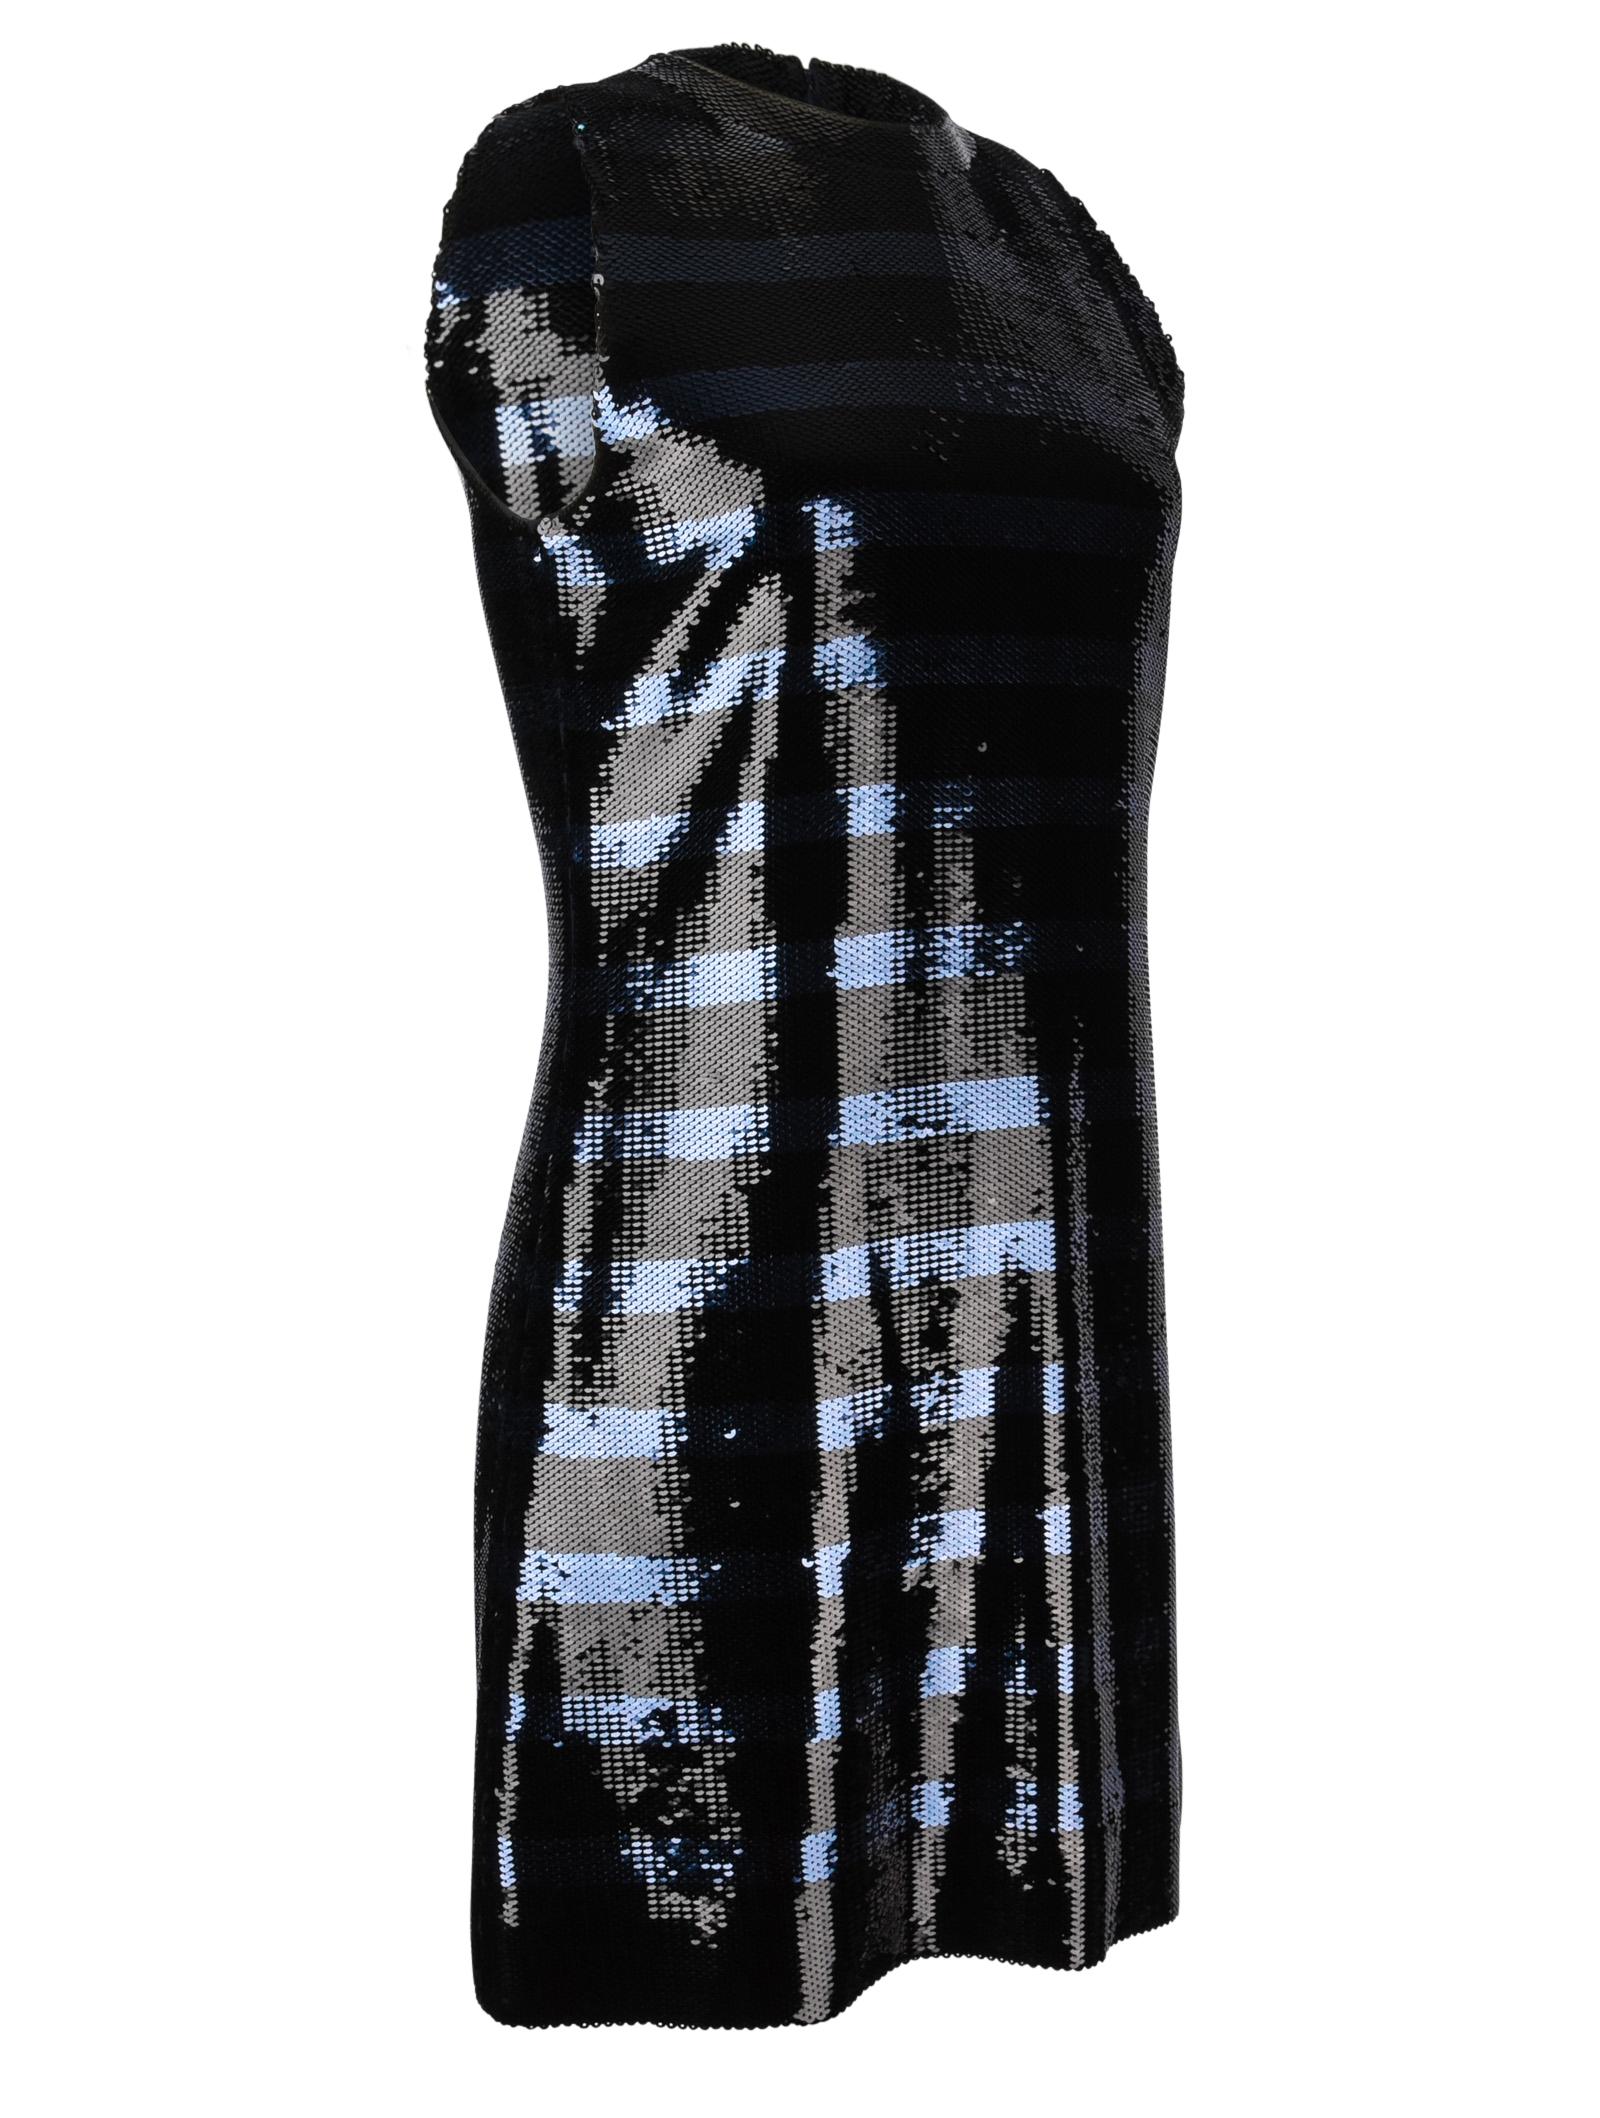 Women's Christian Dior Dress Striped Sequin Embellished Navy / Black 6